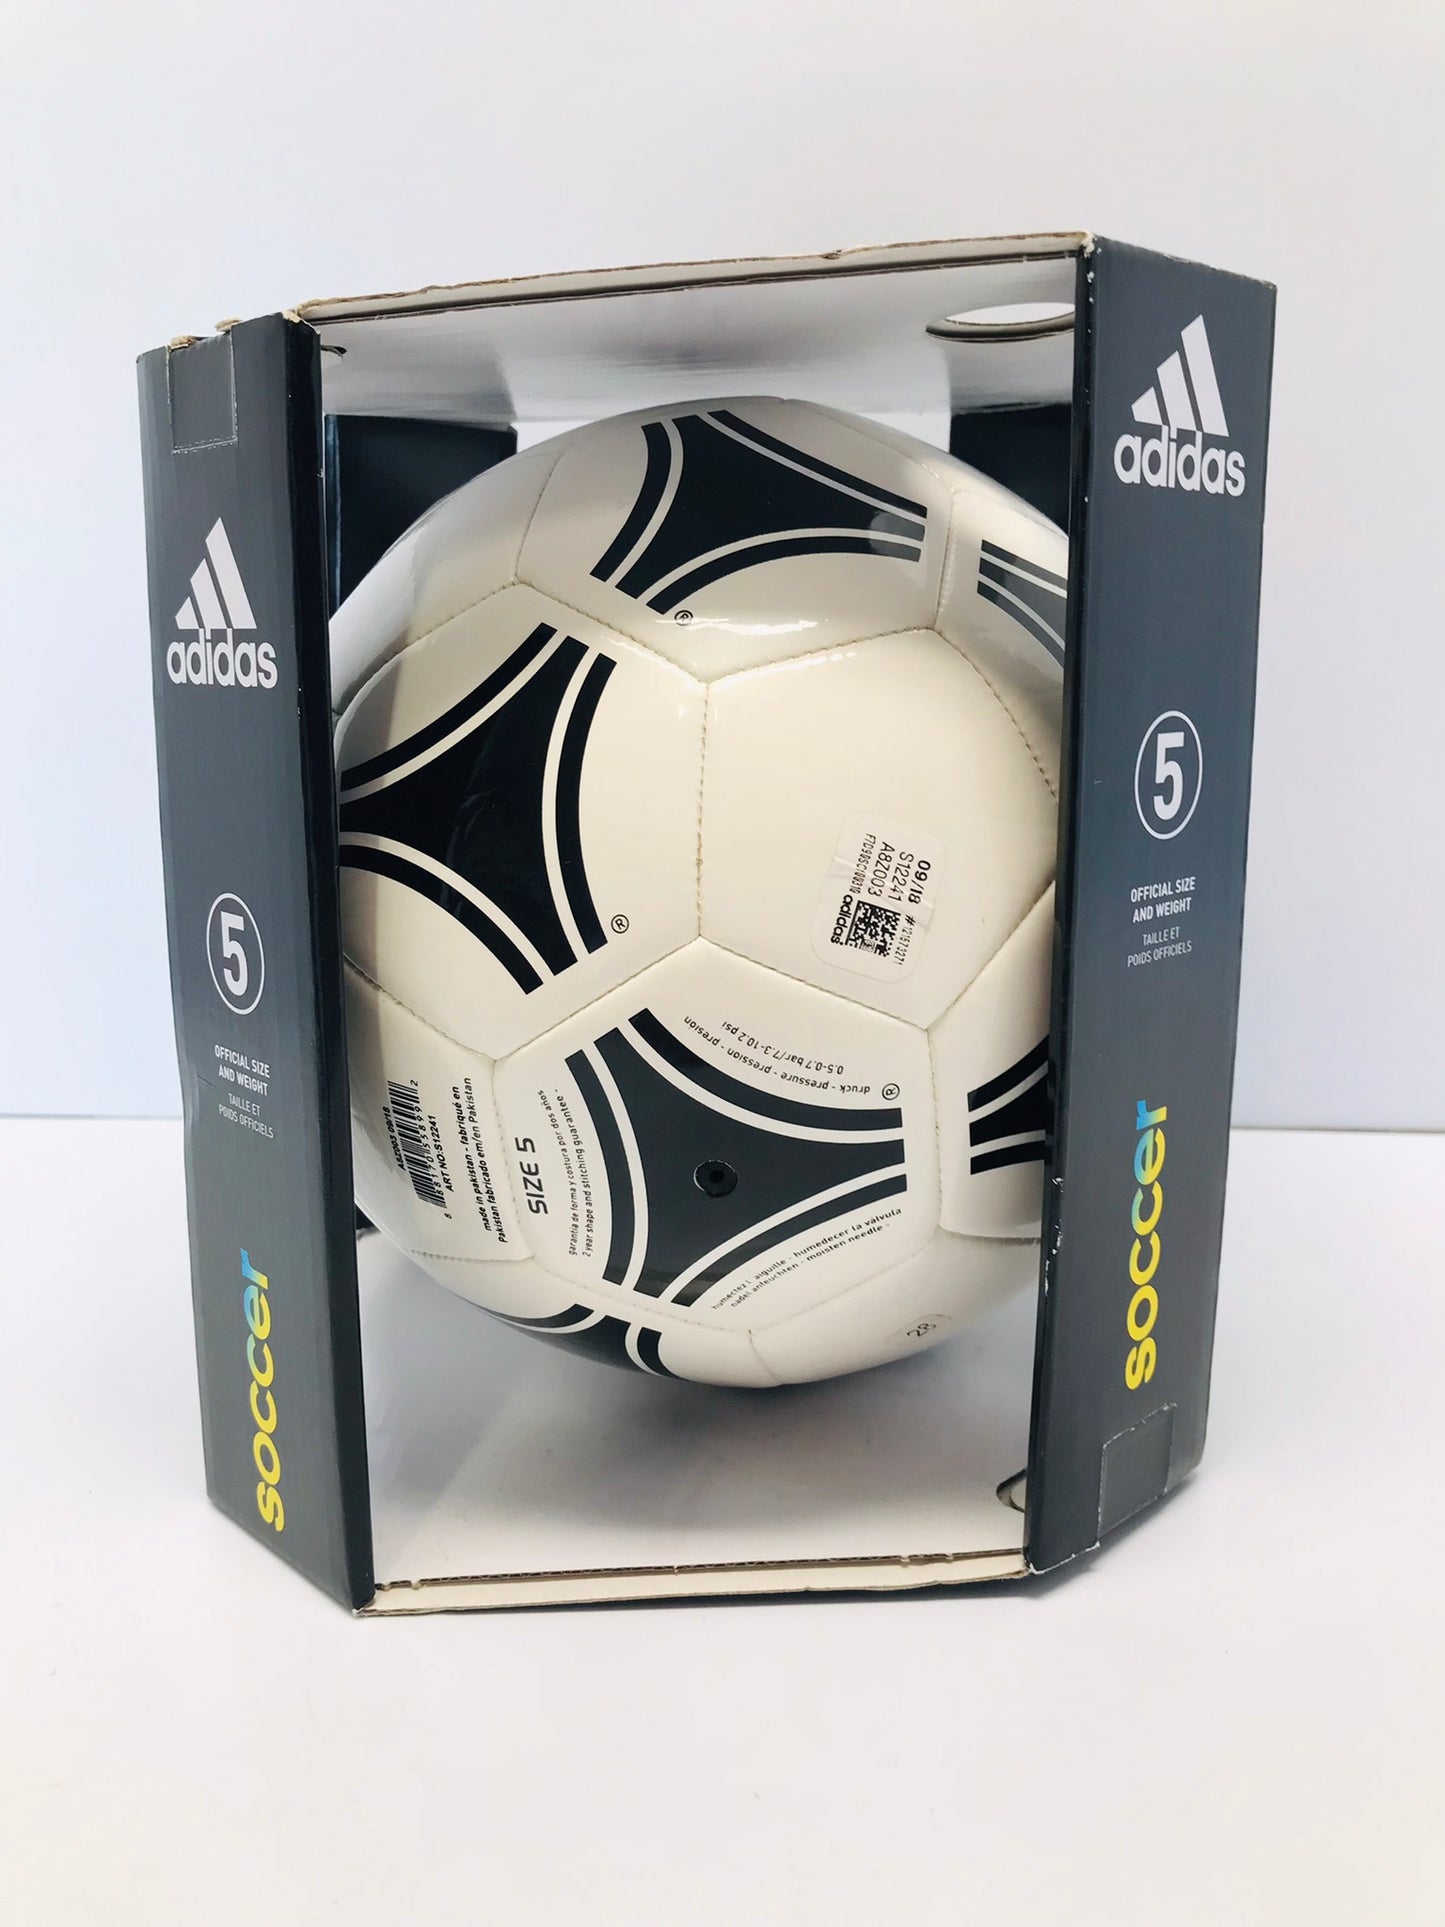 Soccer Child Size Adidas Tango Glider Soccer Ball Size 5 Like New